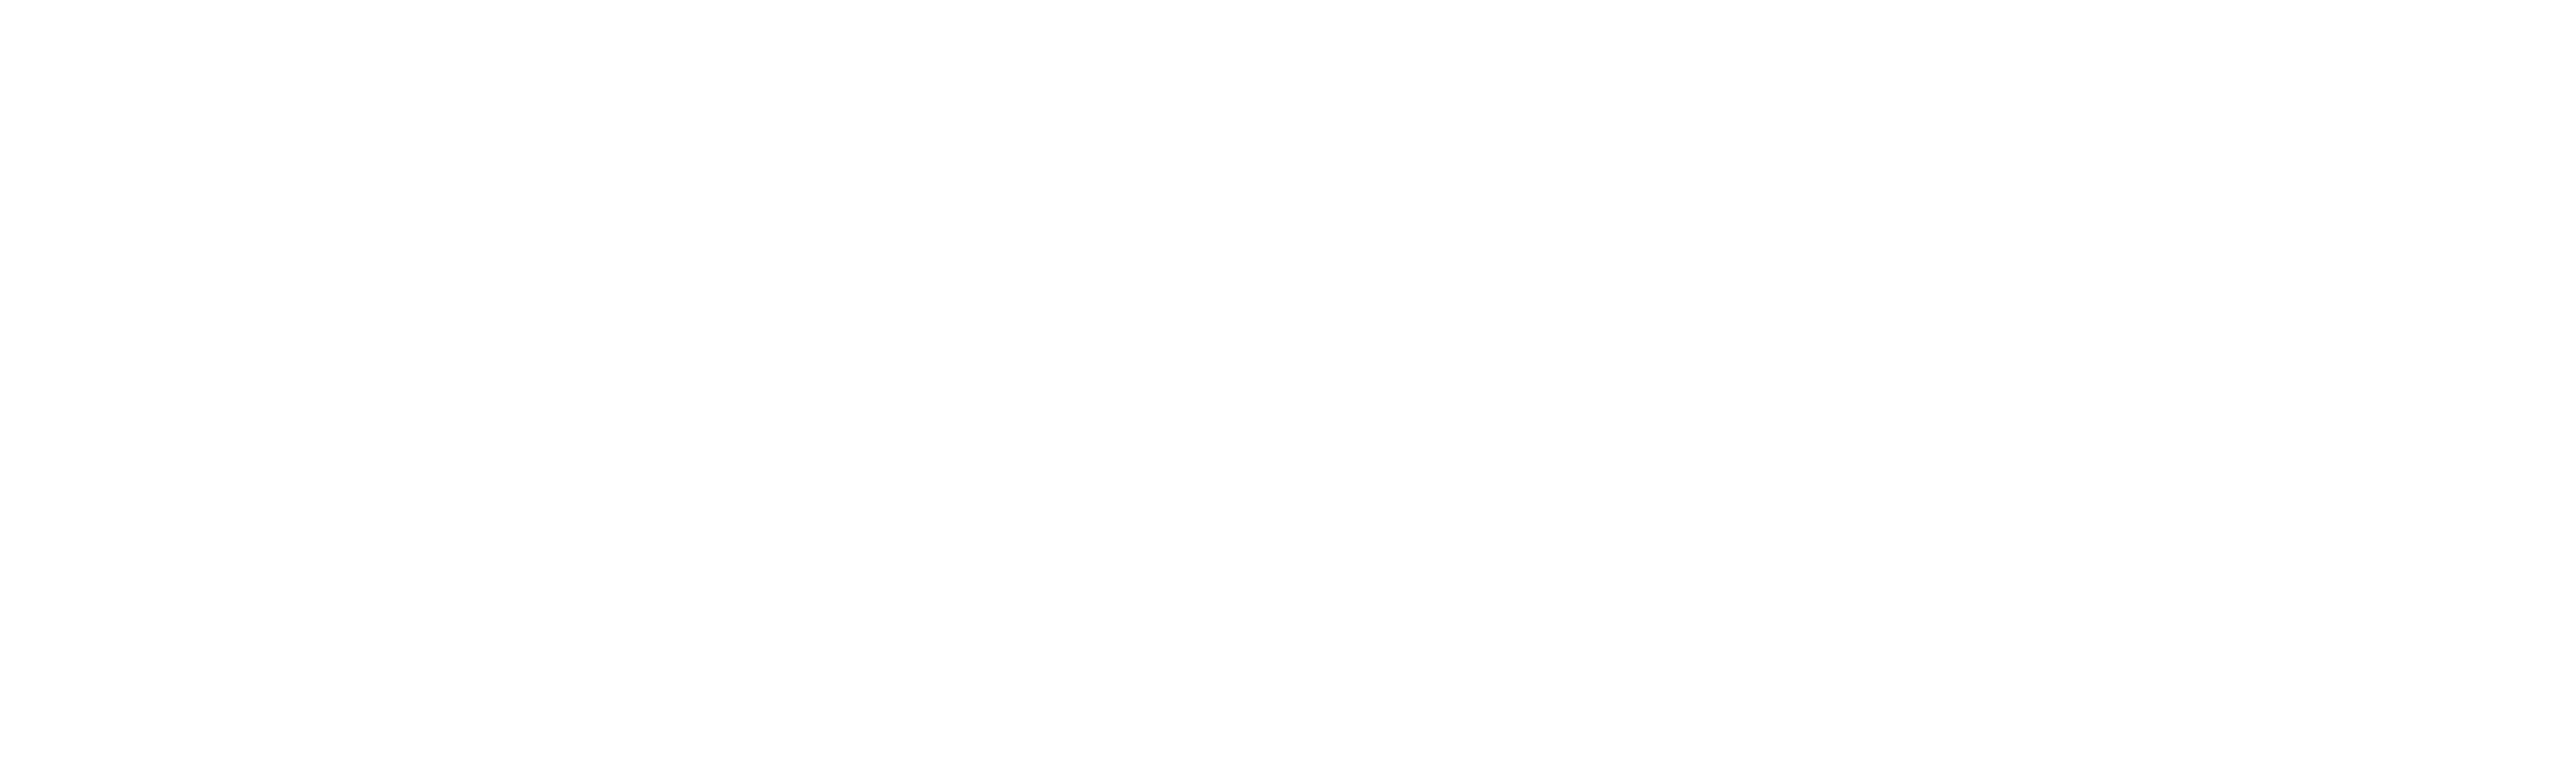 Firejacks